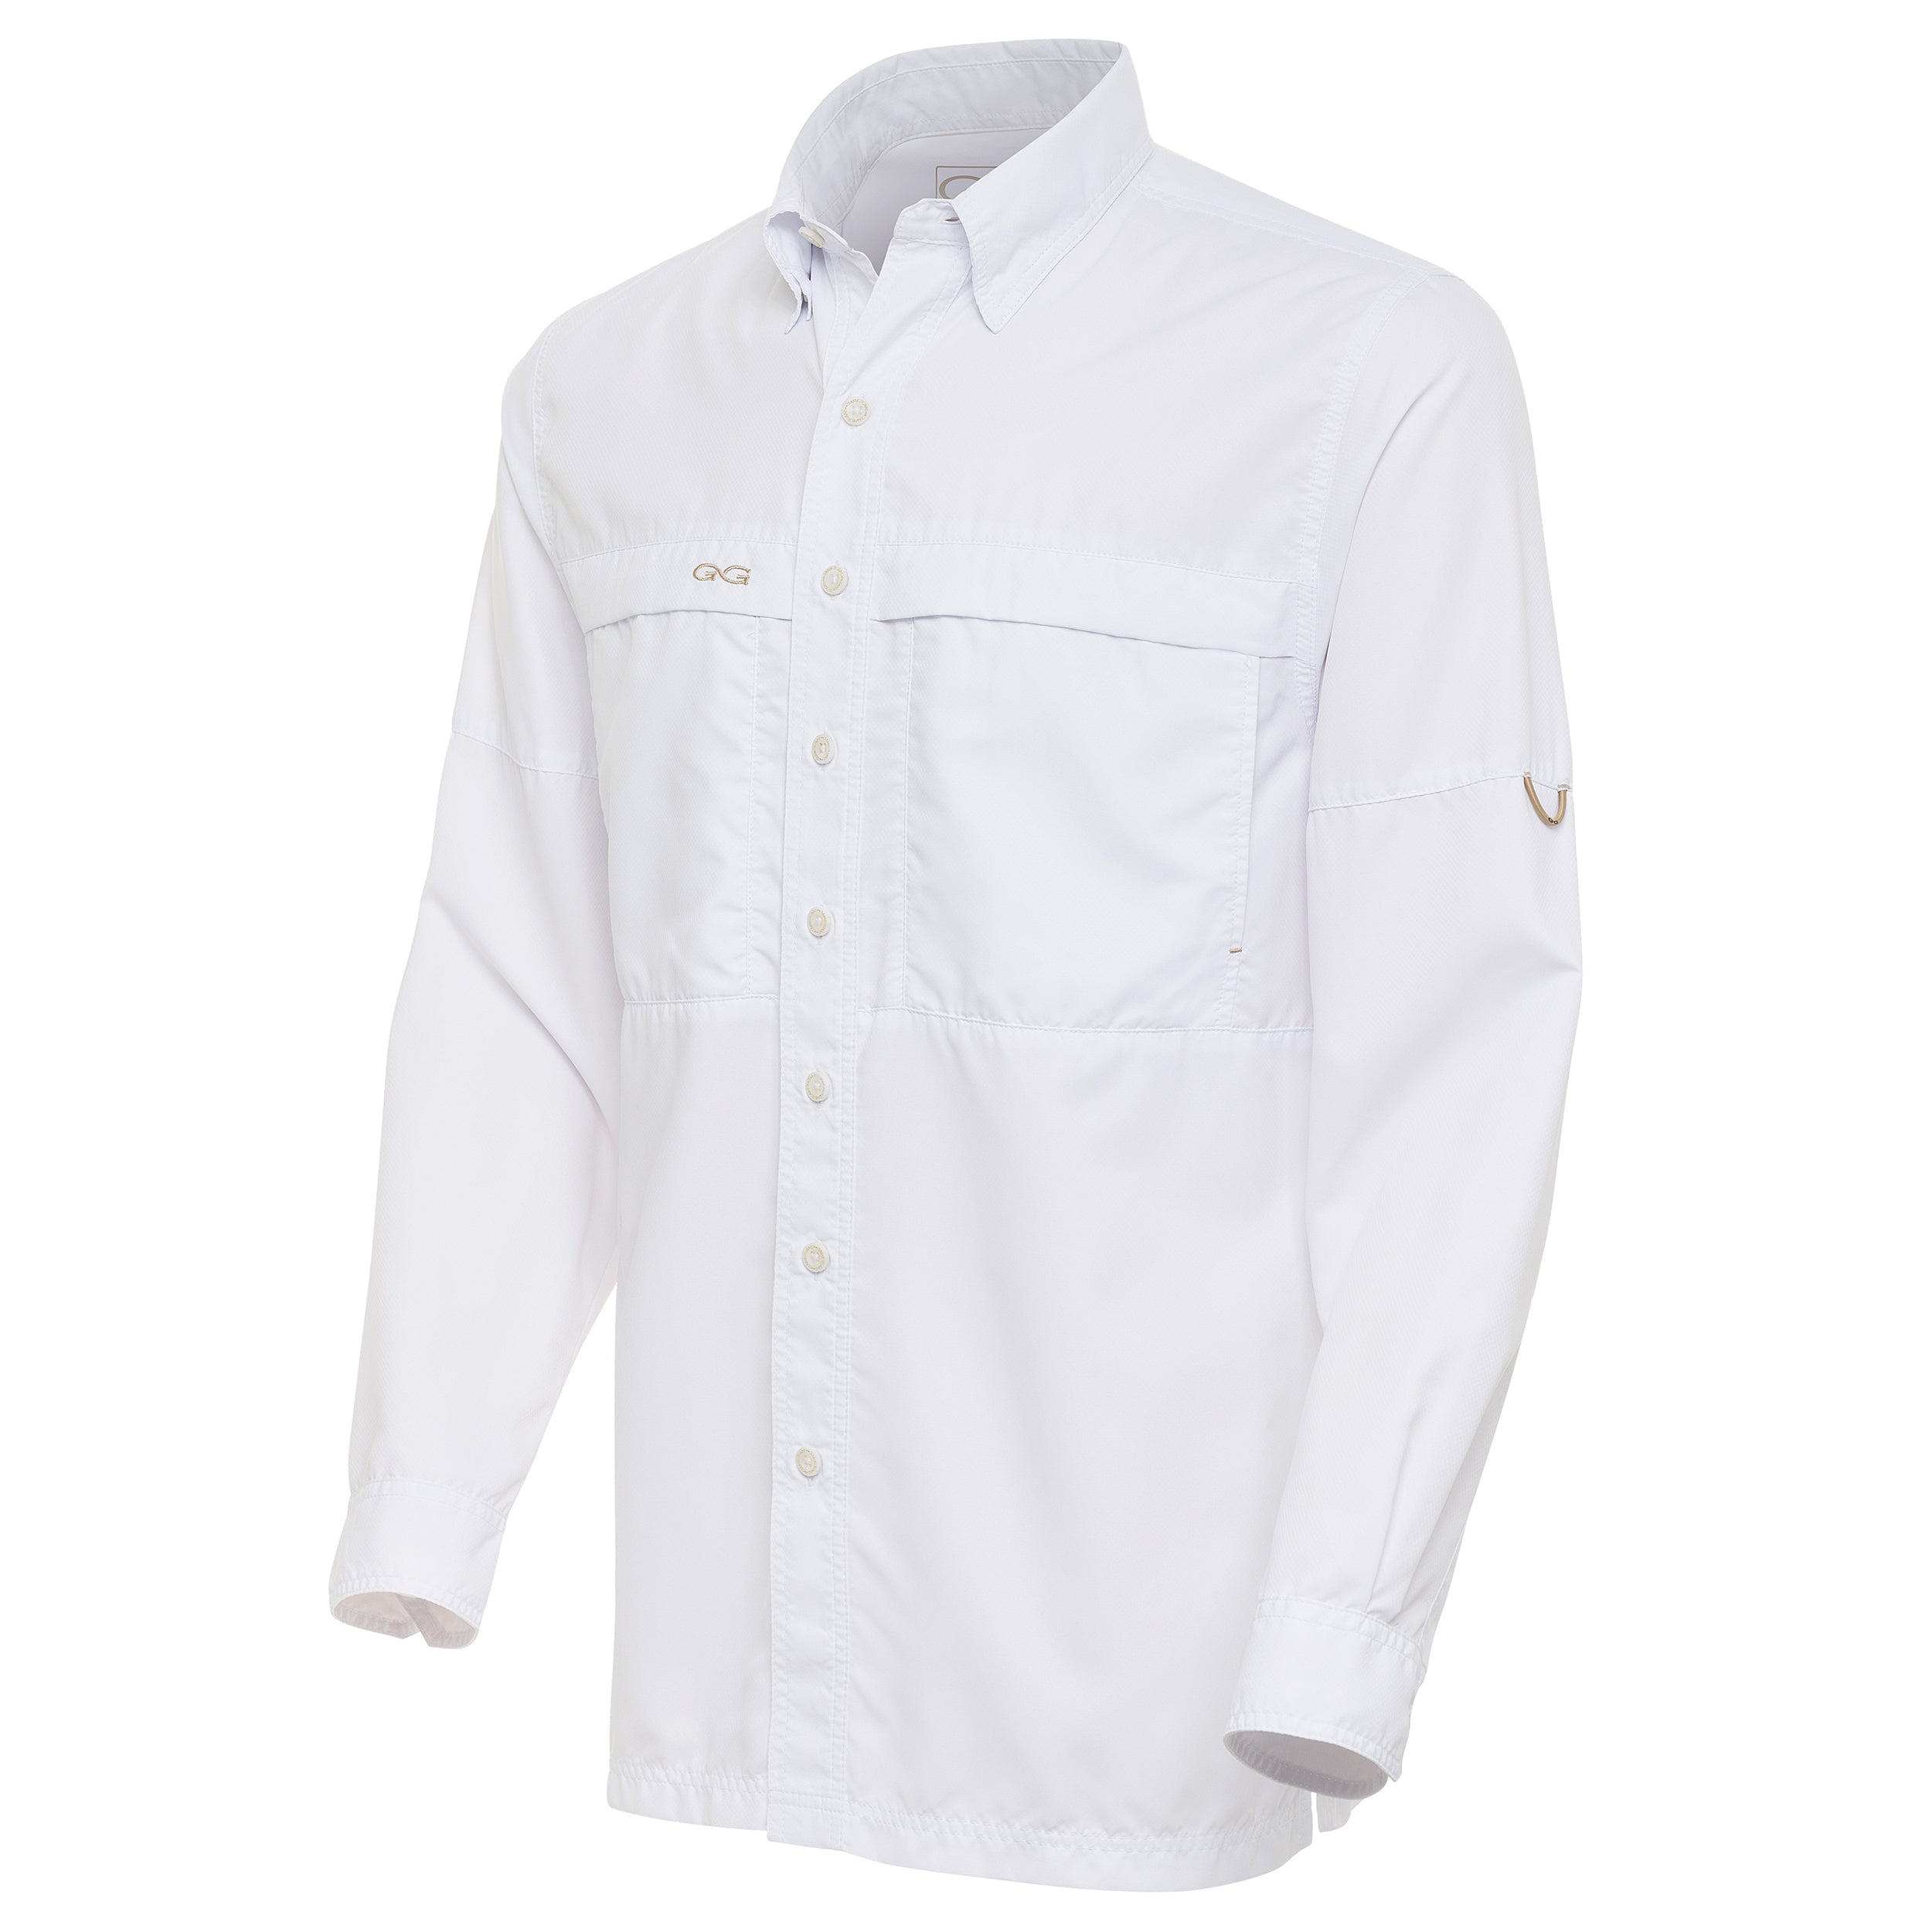 GameGuard Men's White Microfiber Shirt | Long Sleeve